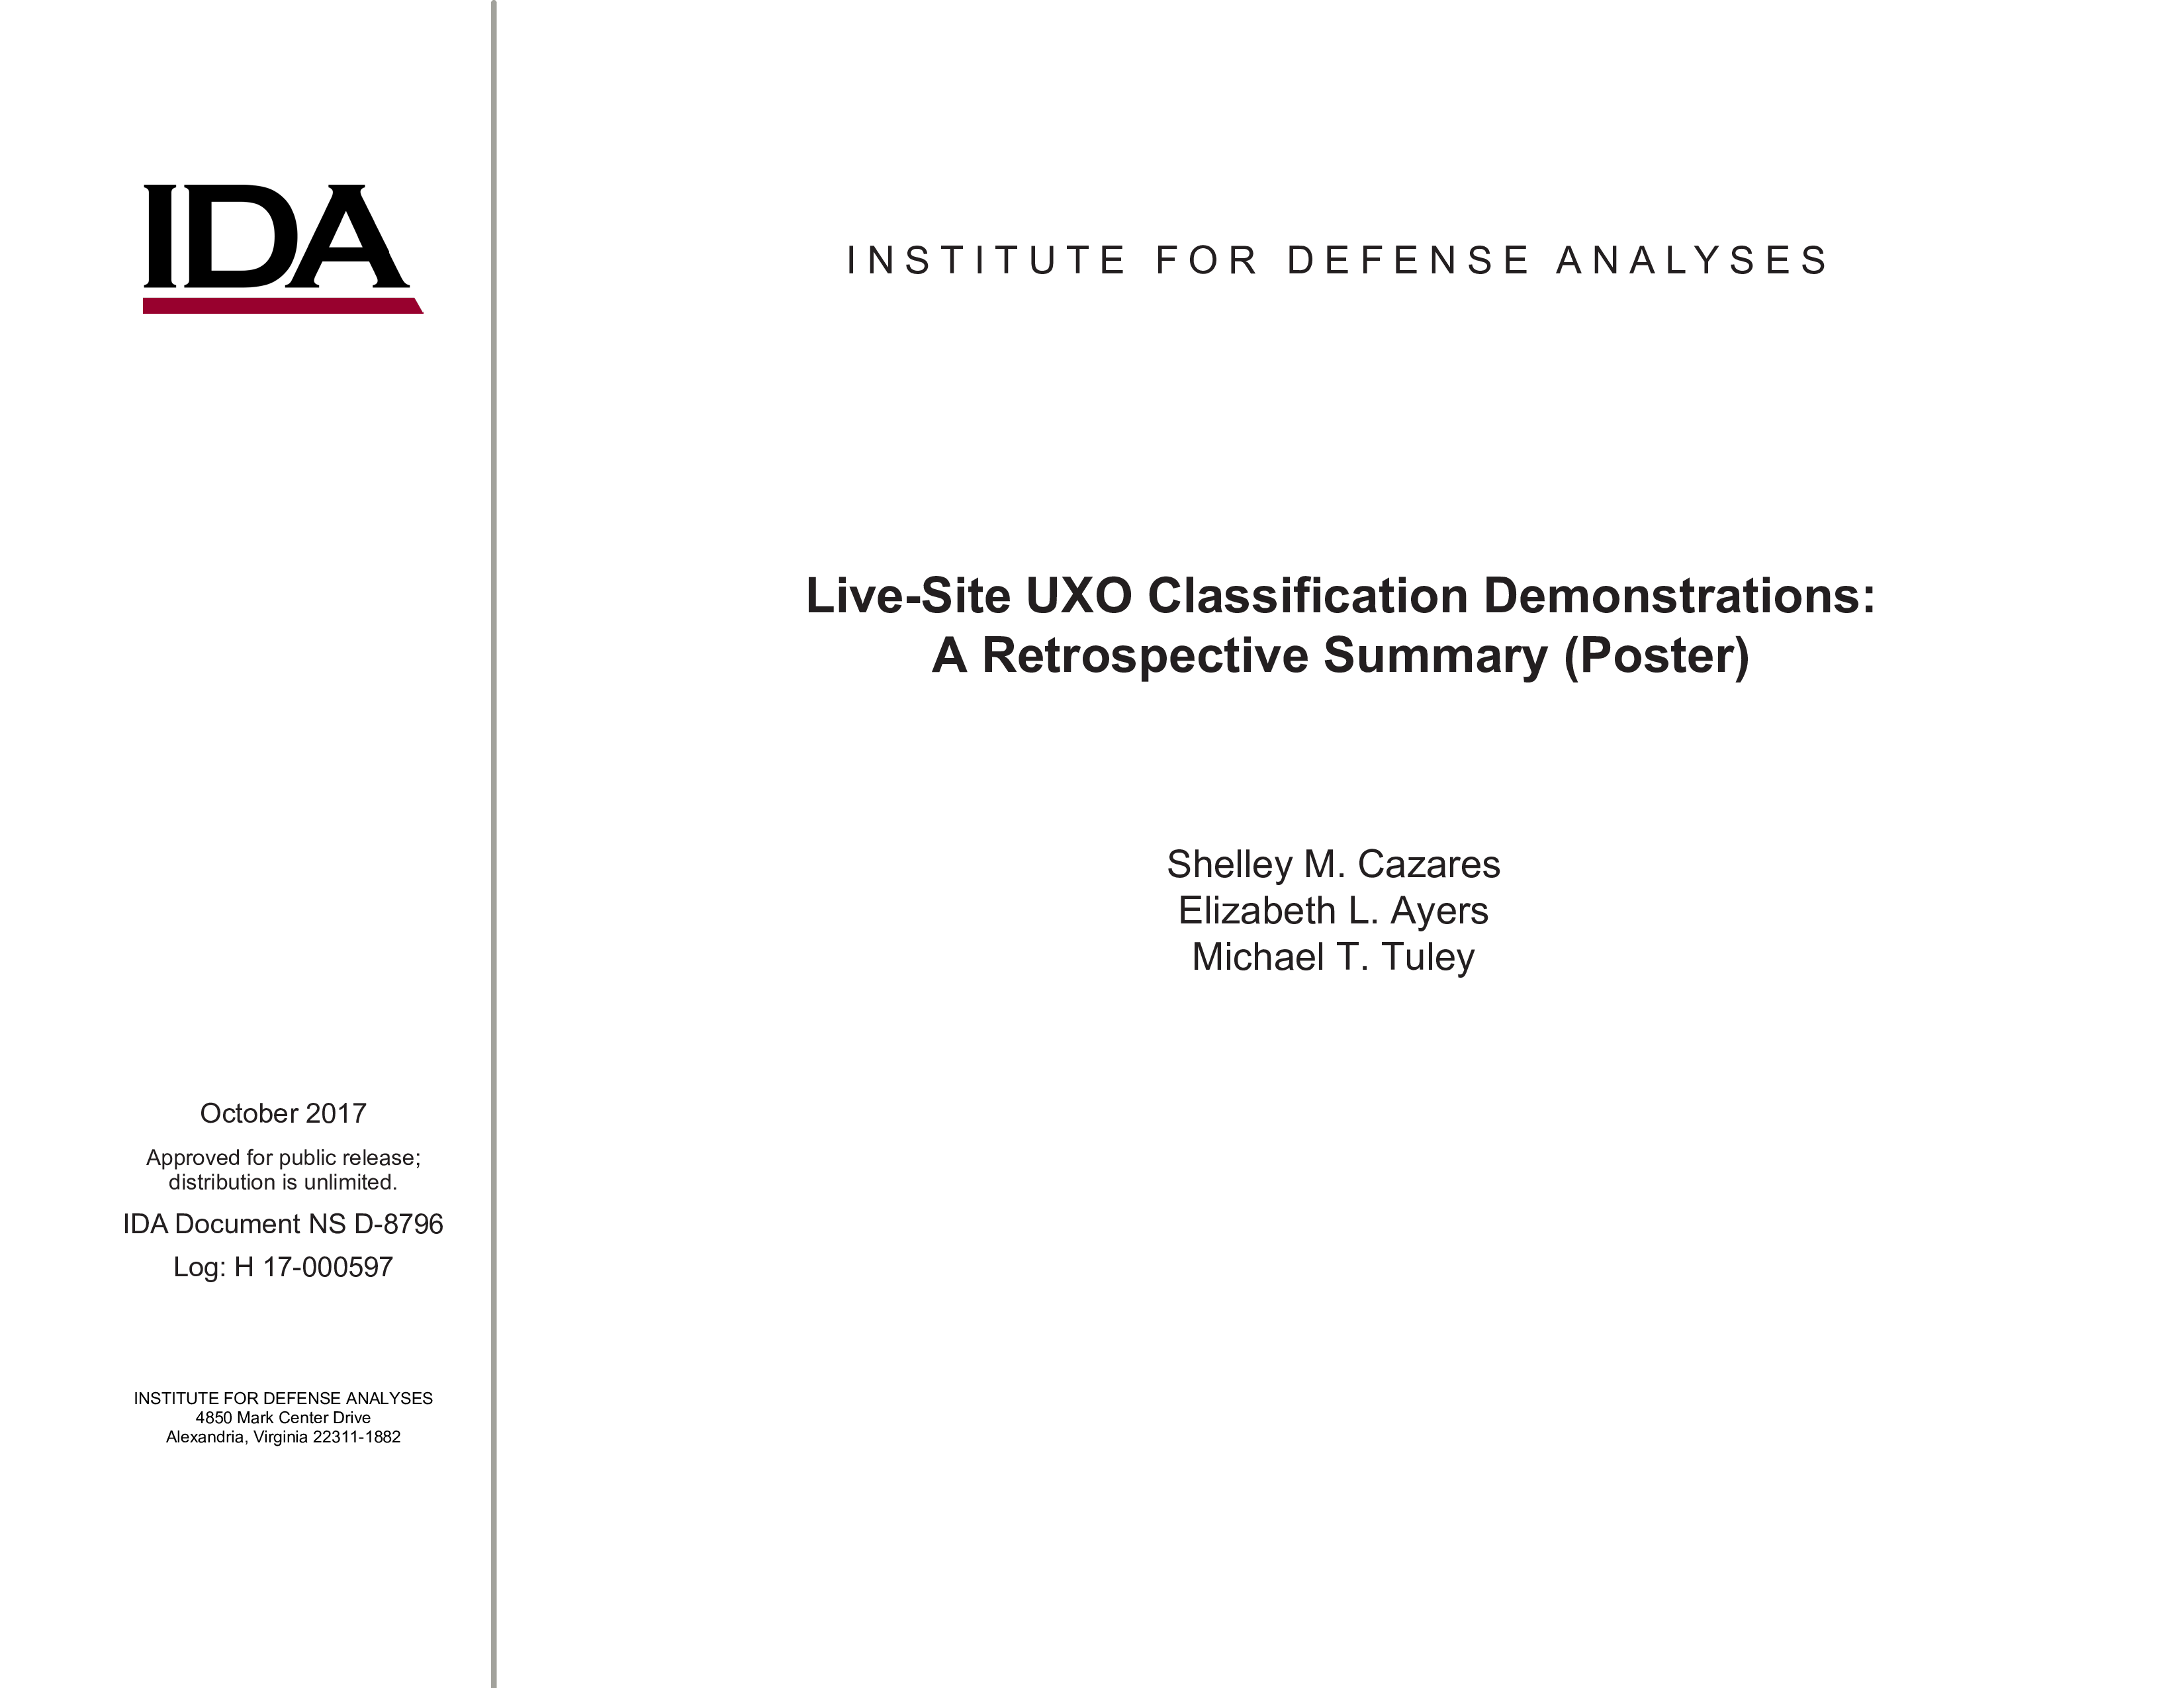 Live-Site UXO Classification Demonstrations: A Retrospective Summary (Poster)